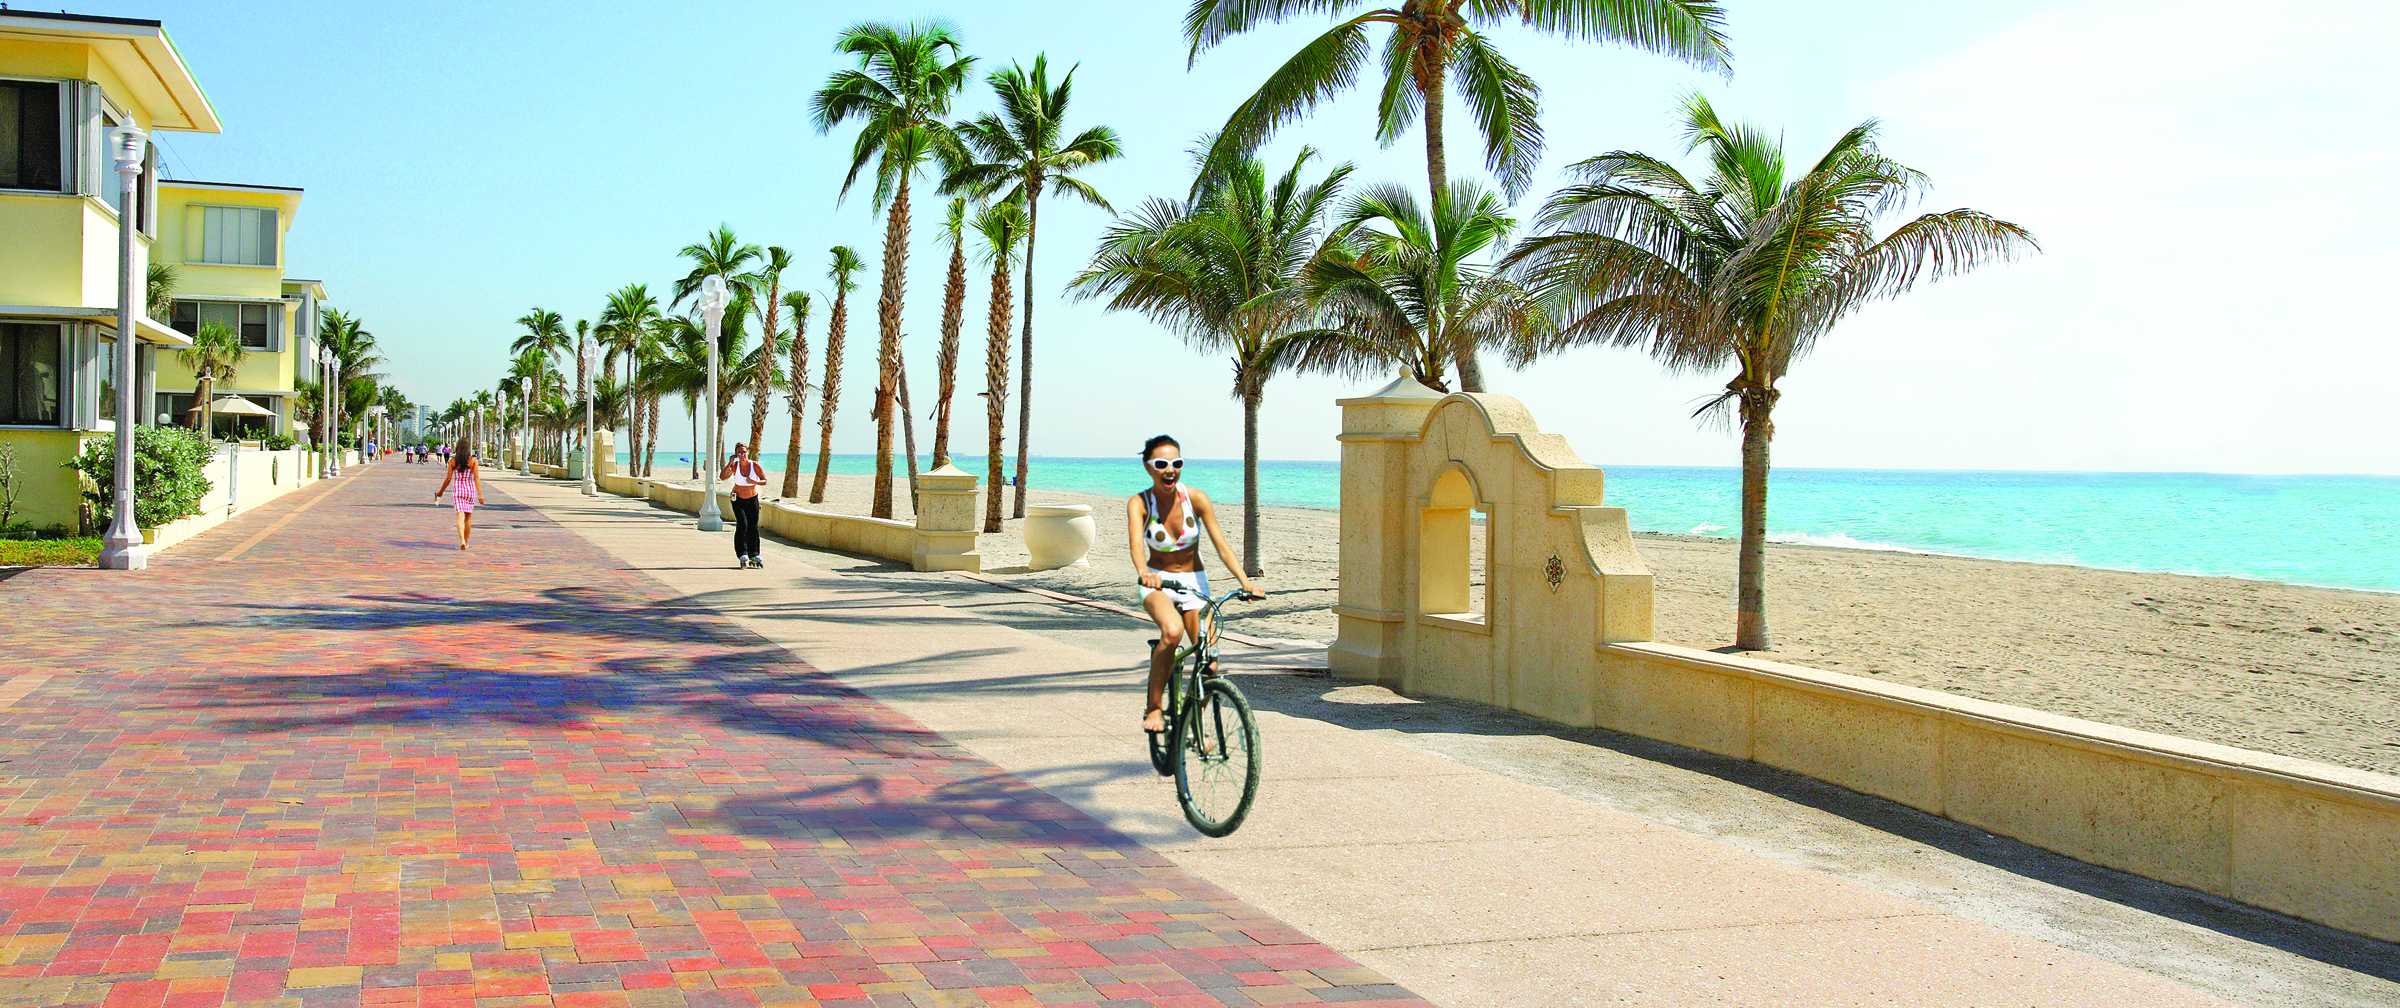 broadwalk-bike - Hollywood Florida Beach Vacations Planner